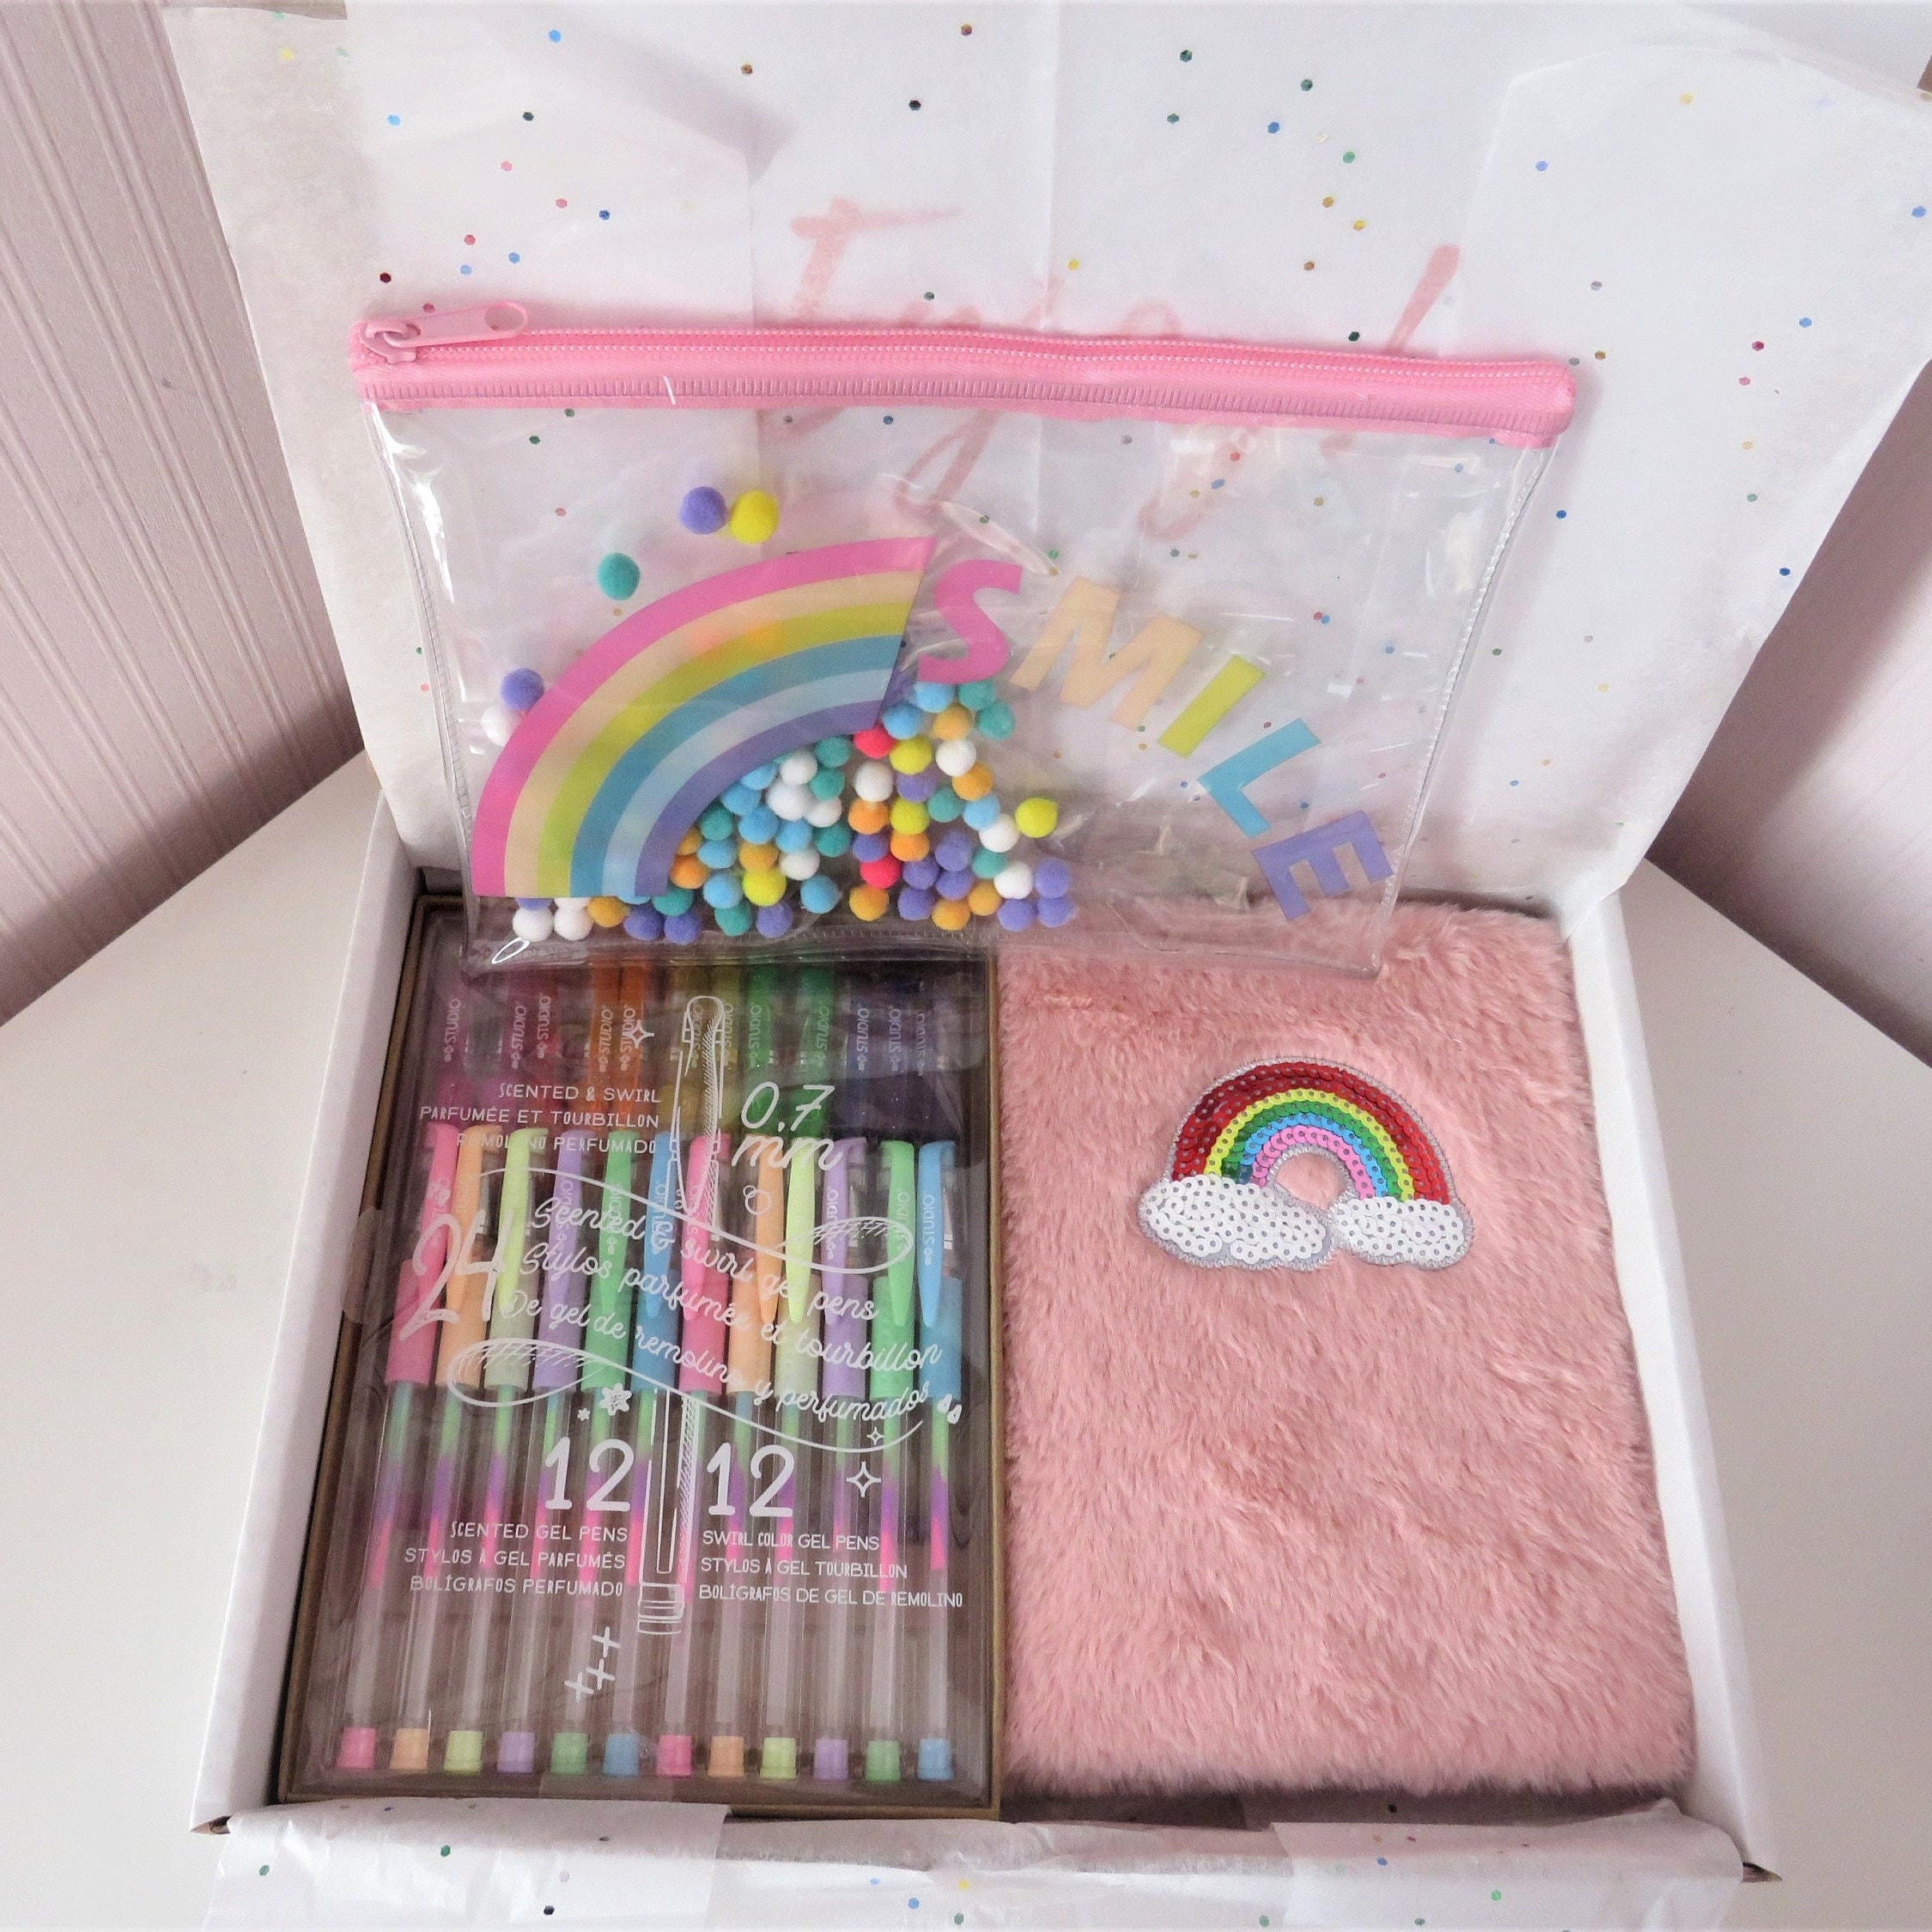 Totally Cute Kawaii All in One SketchBook Kit Boxed Set Unicorns Rainbows